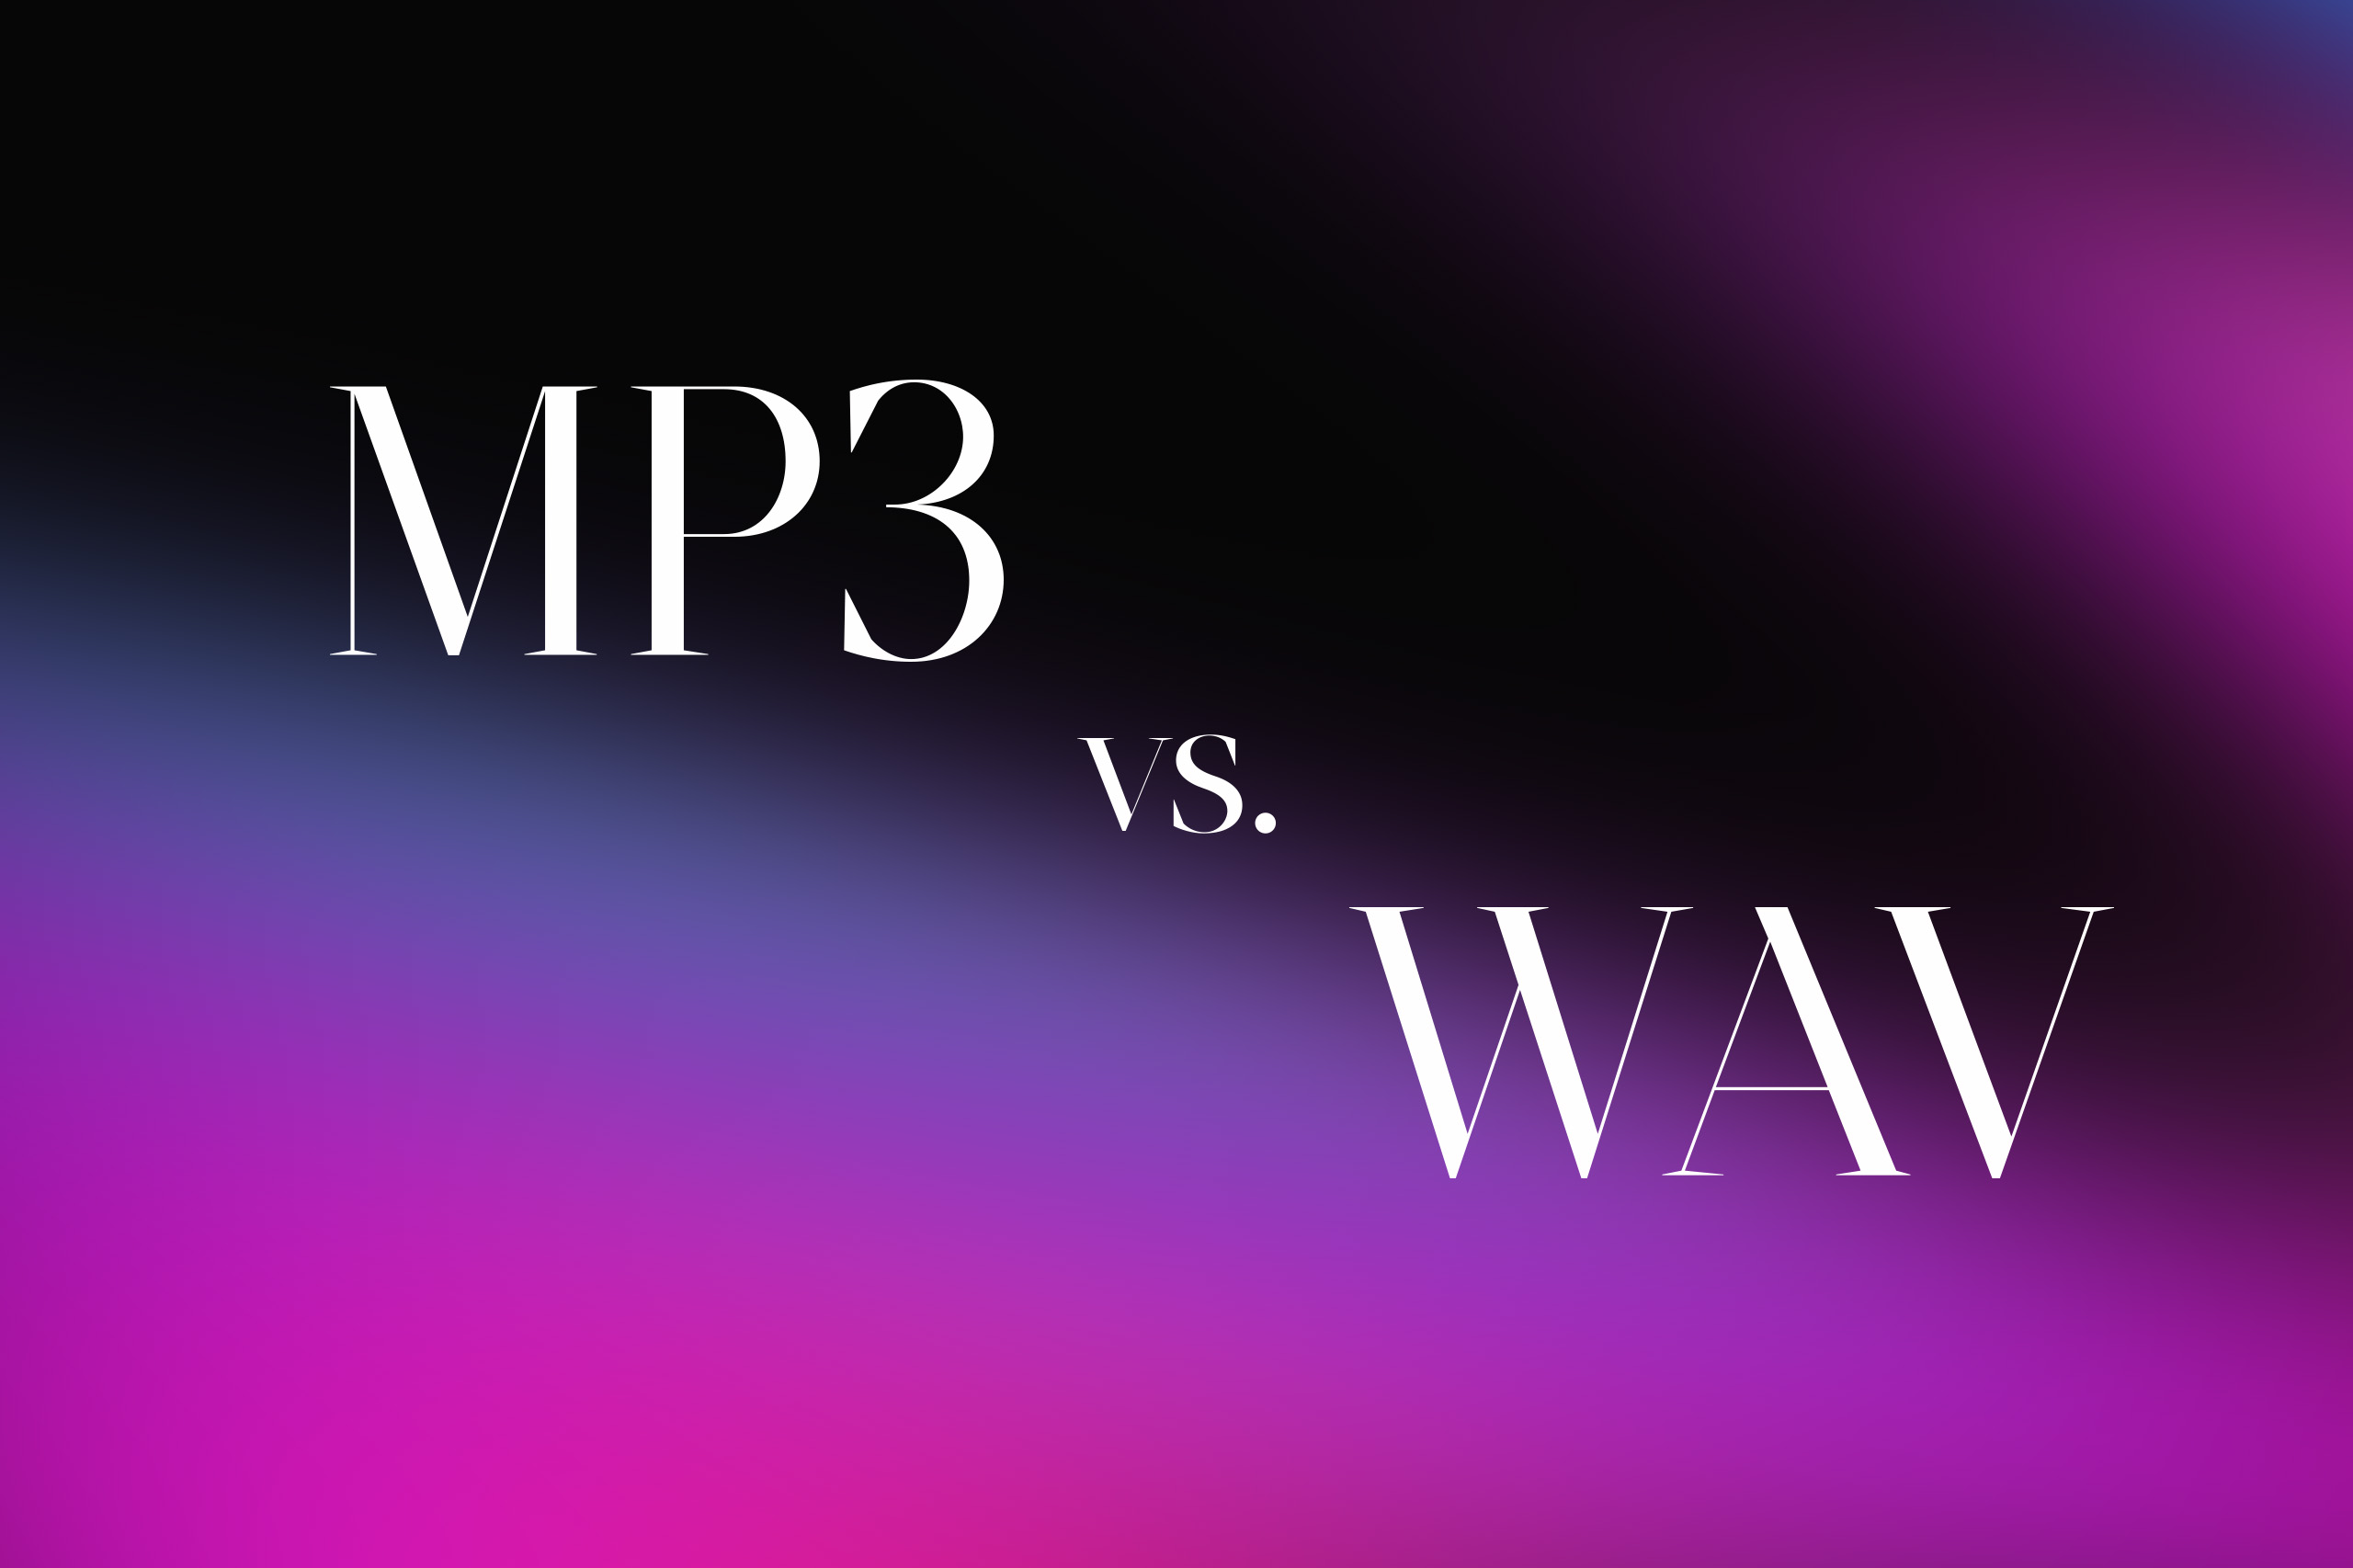 MP3 vs WAV